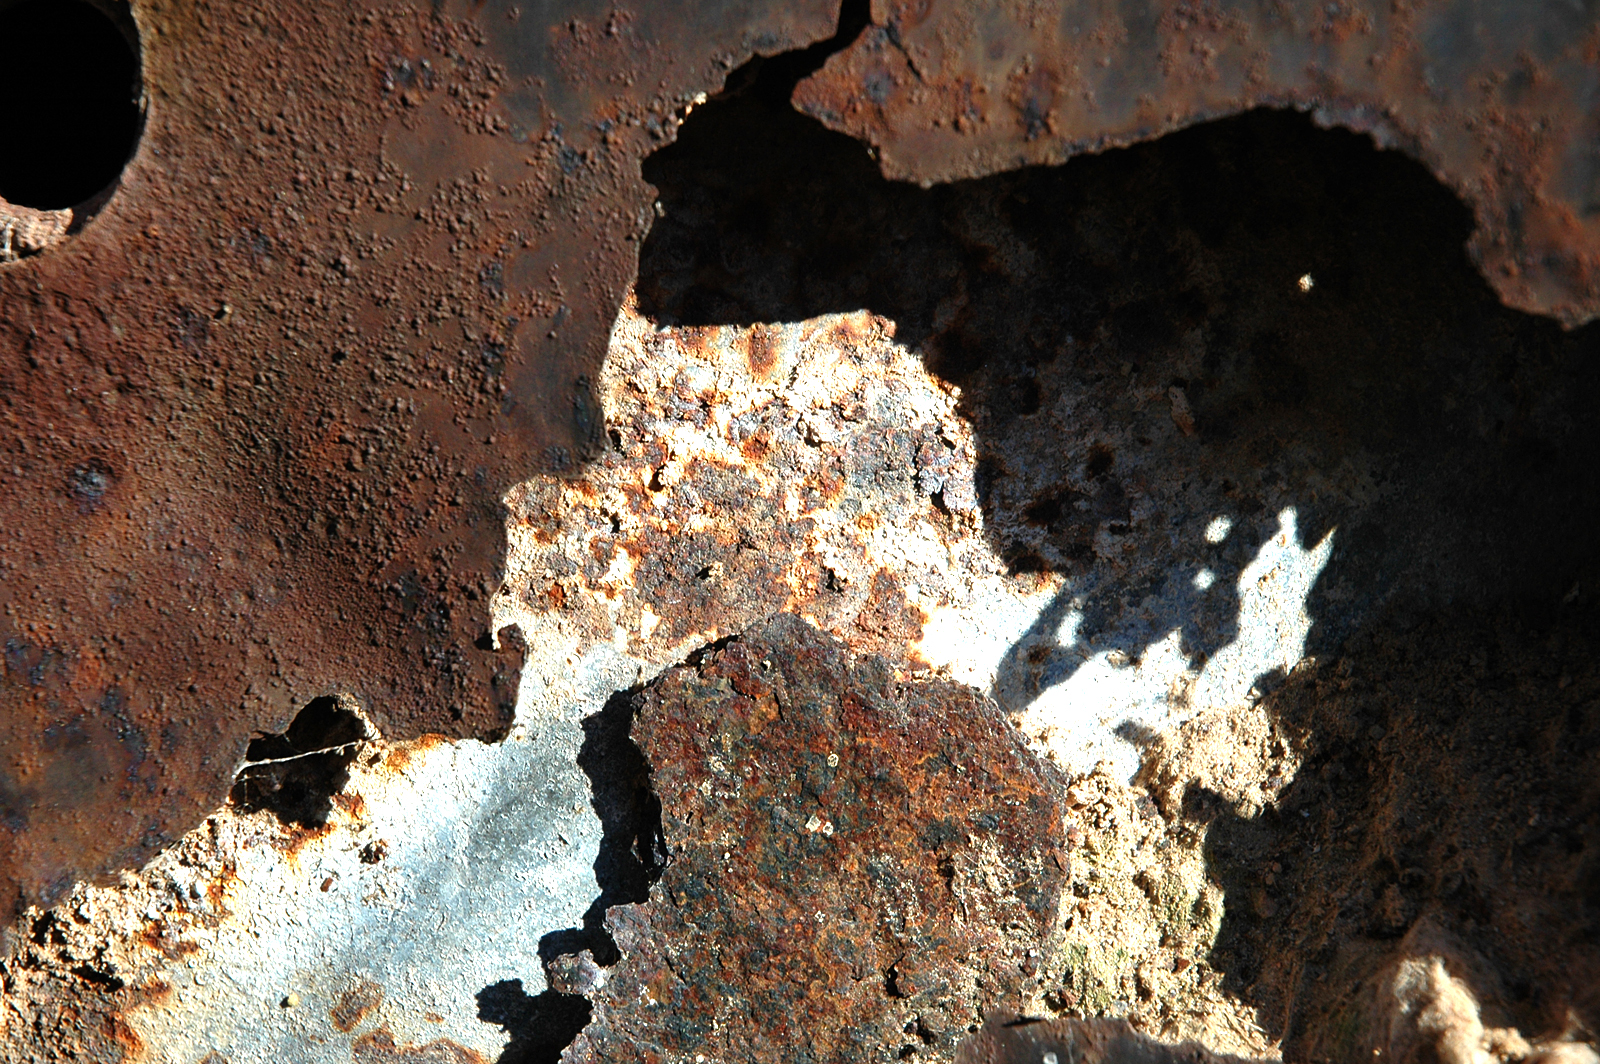 Rust metal texture background, old metal texture image